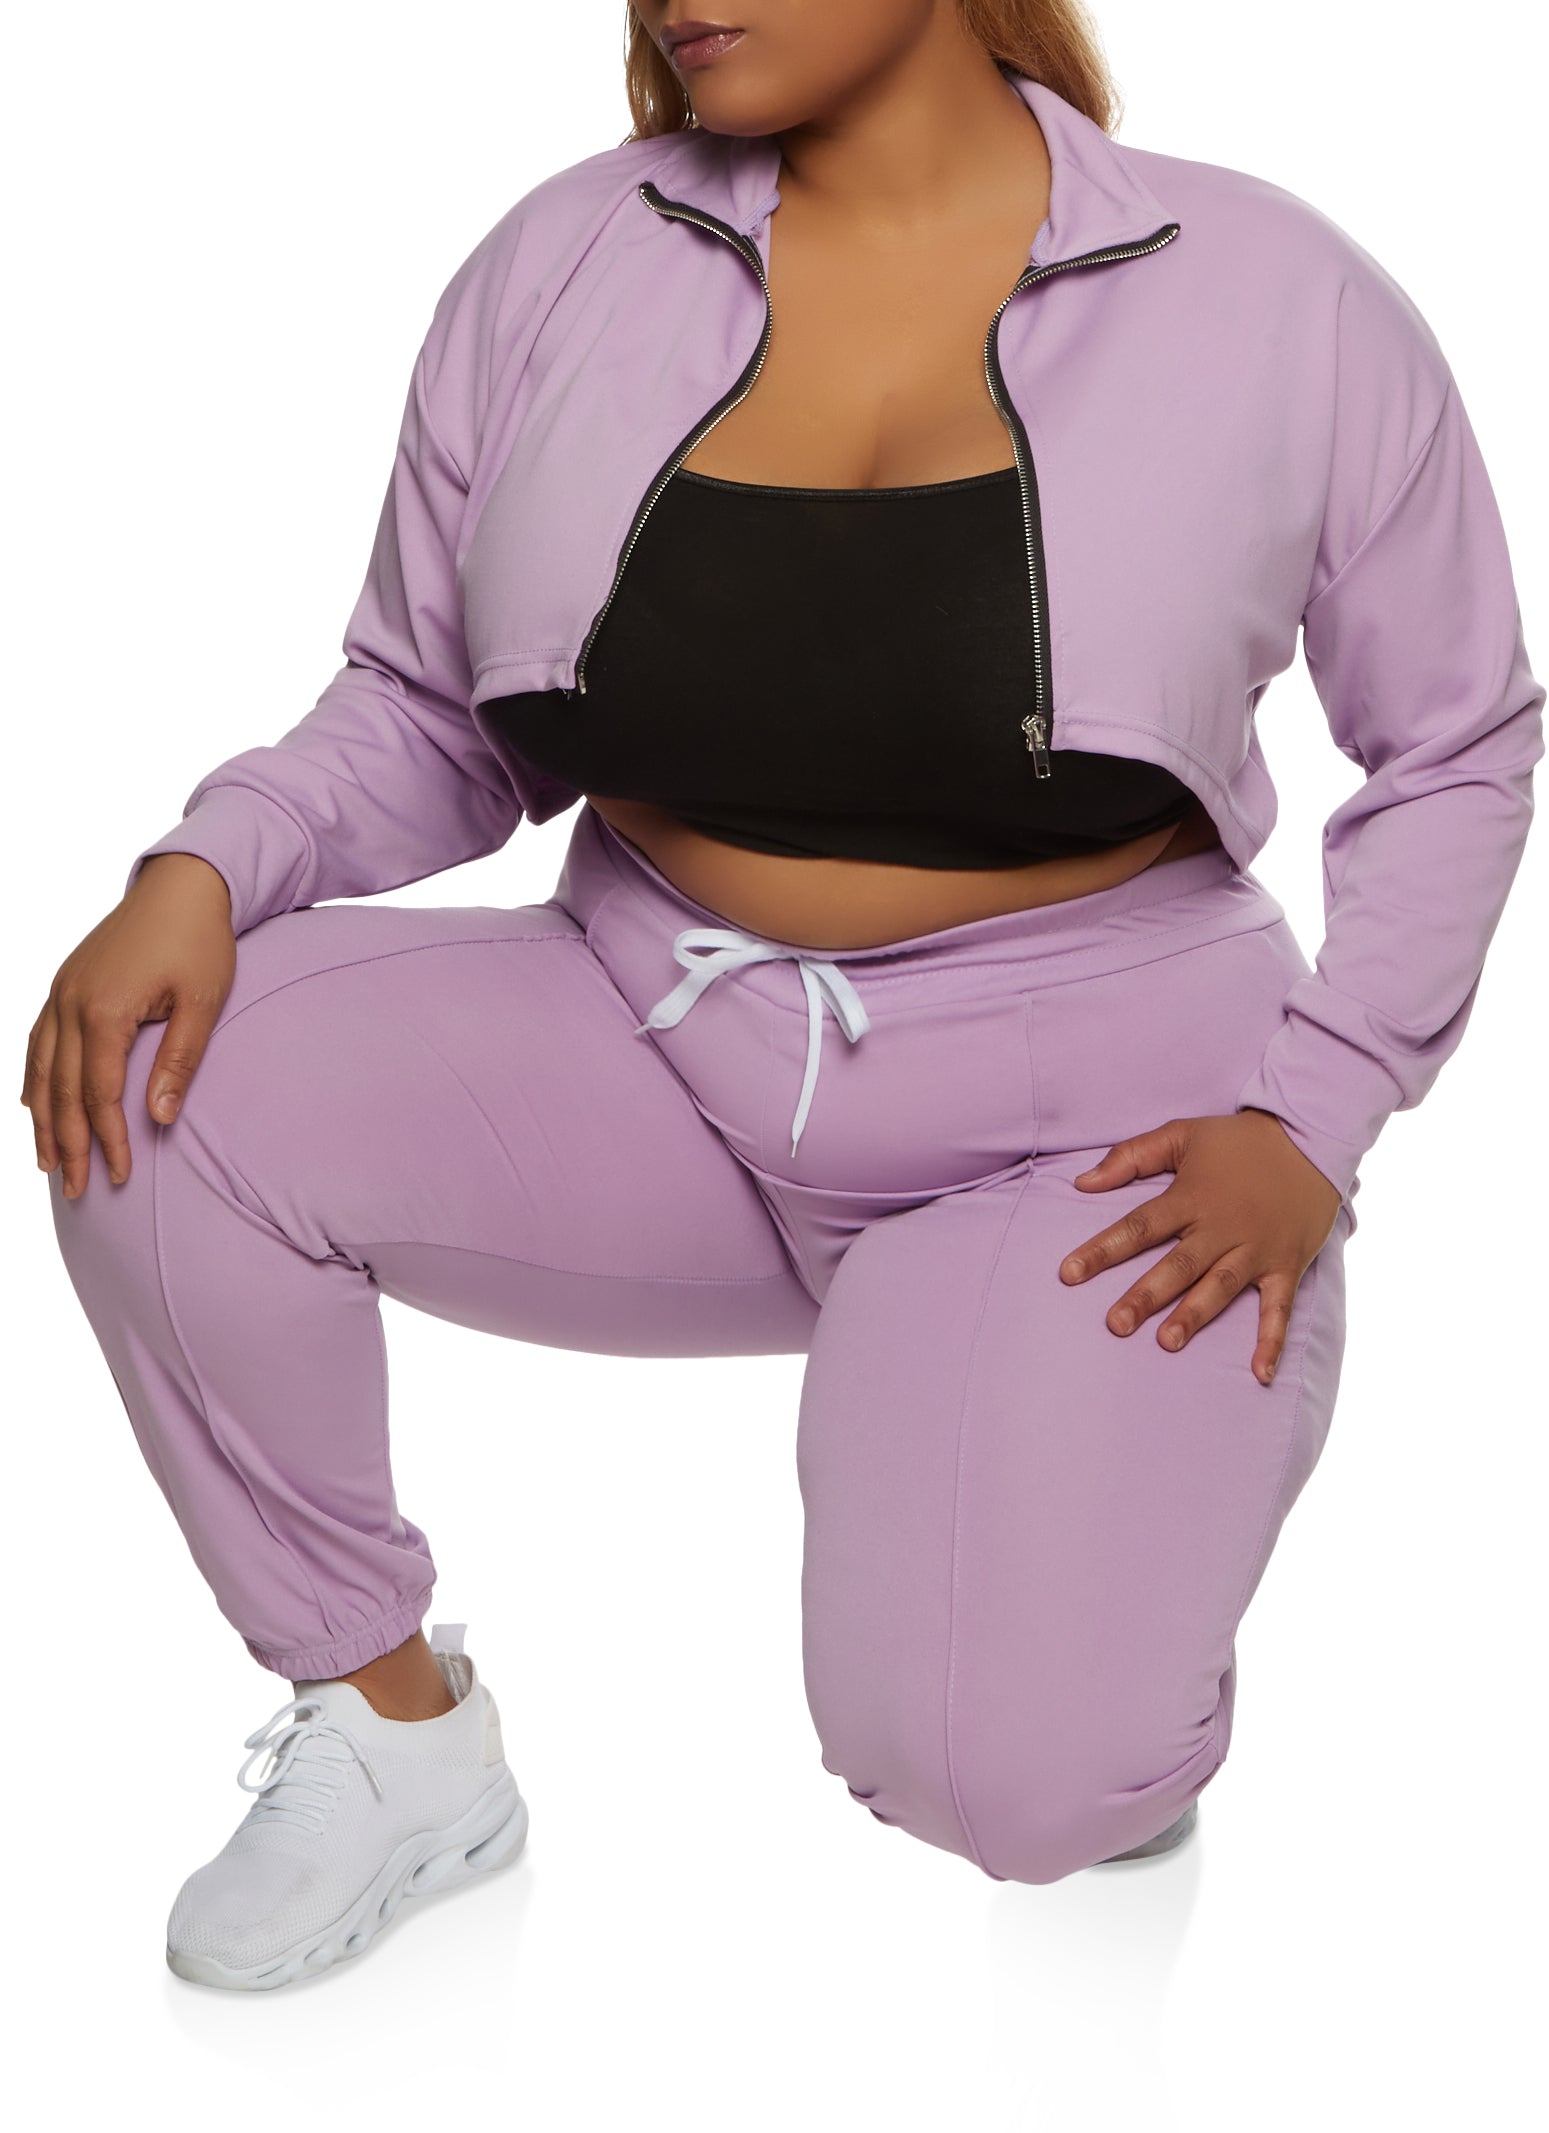 Fashion Bug Size 8 Hipster Style Plus Size Purple Heart Women's